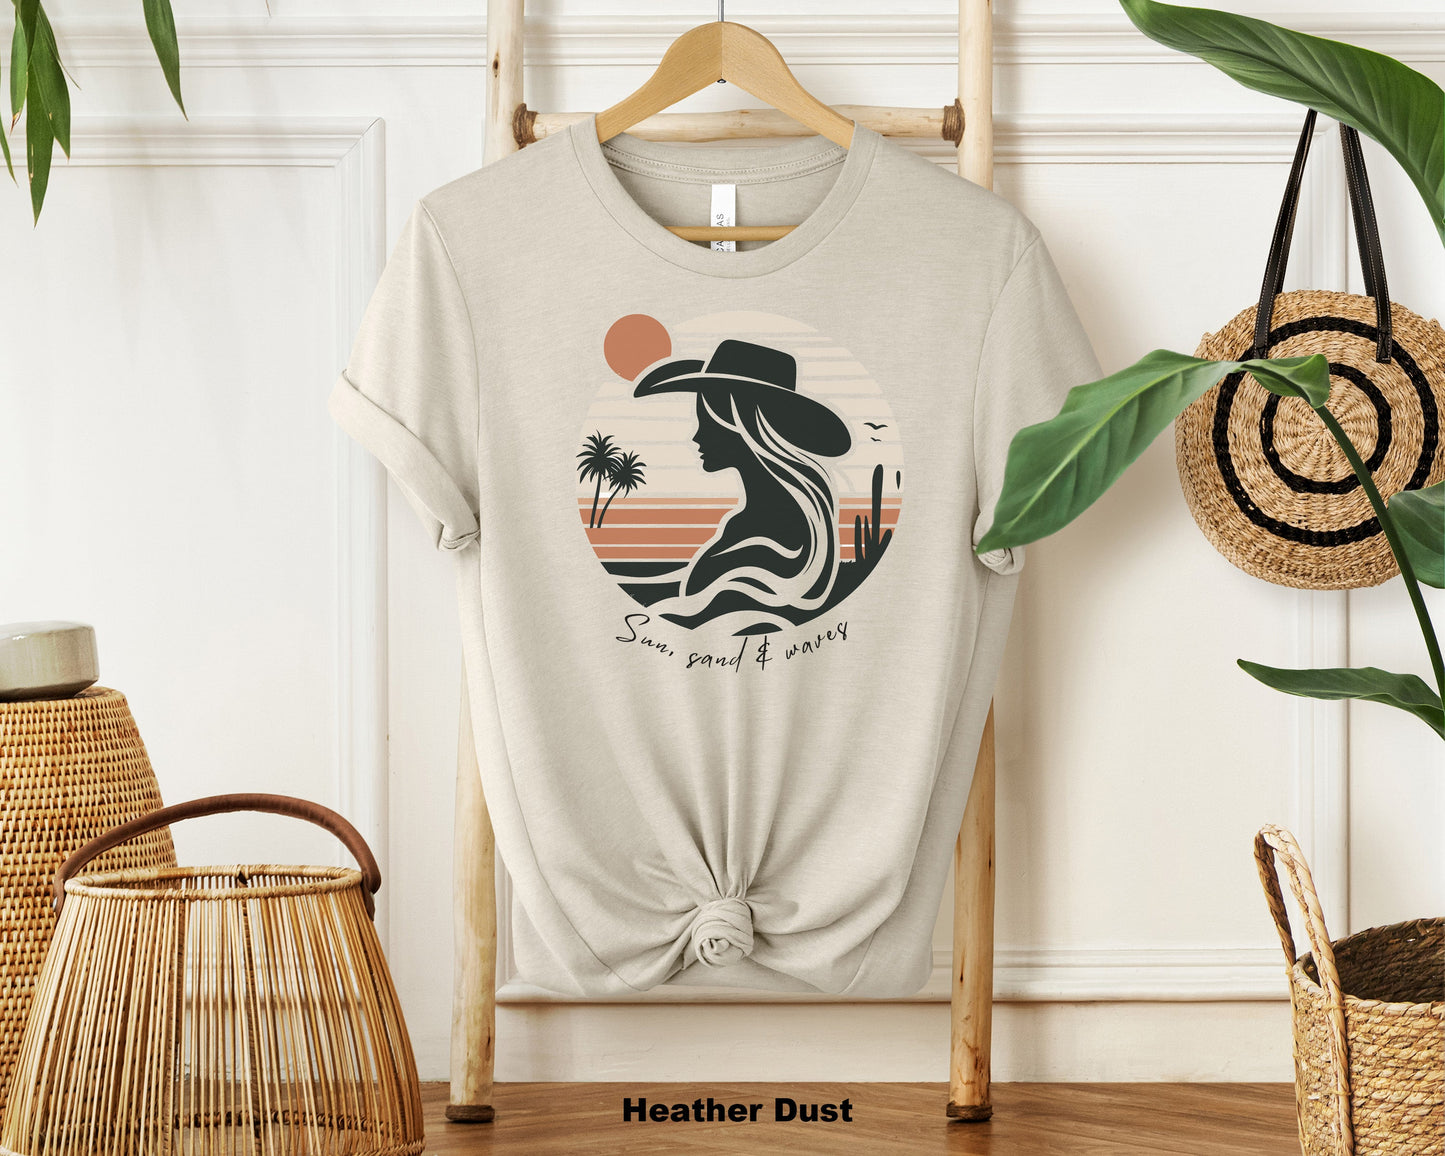 Coastal Cowgirl Crewneck Shirt - Saddle Up for Adventure!